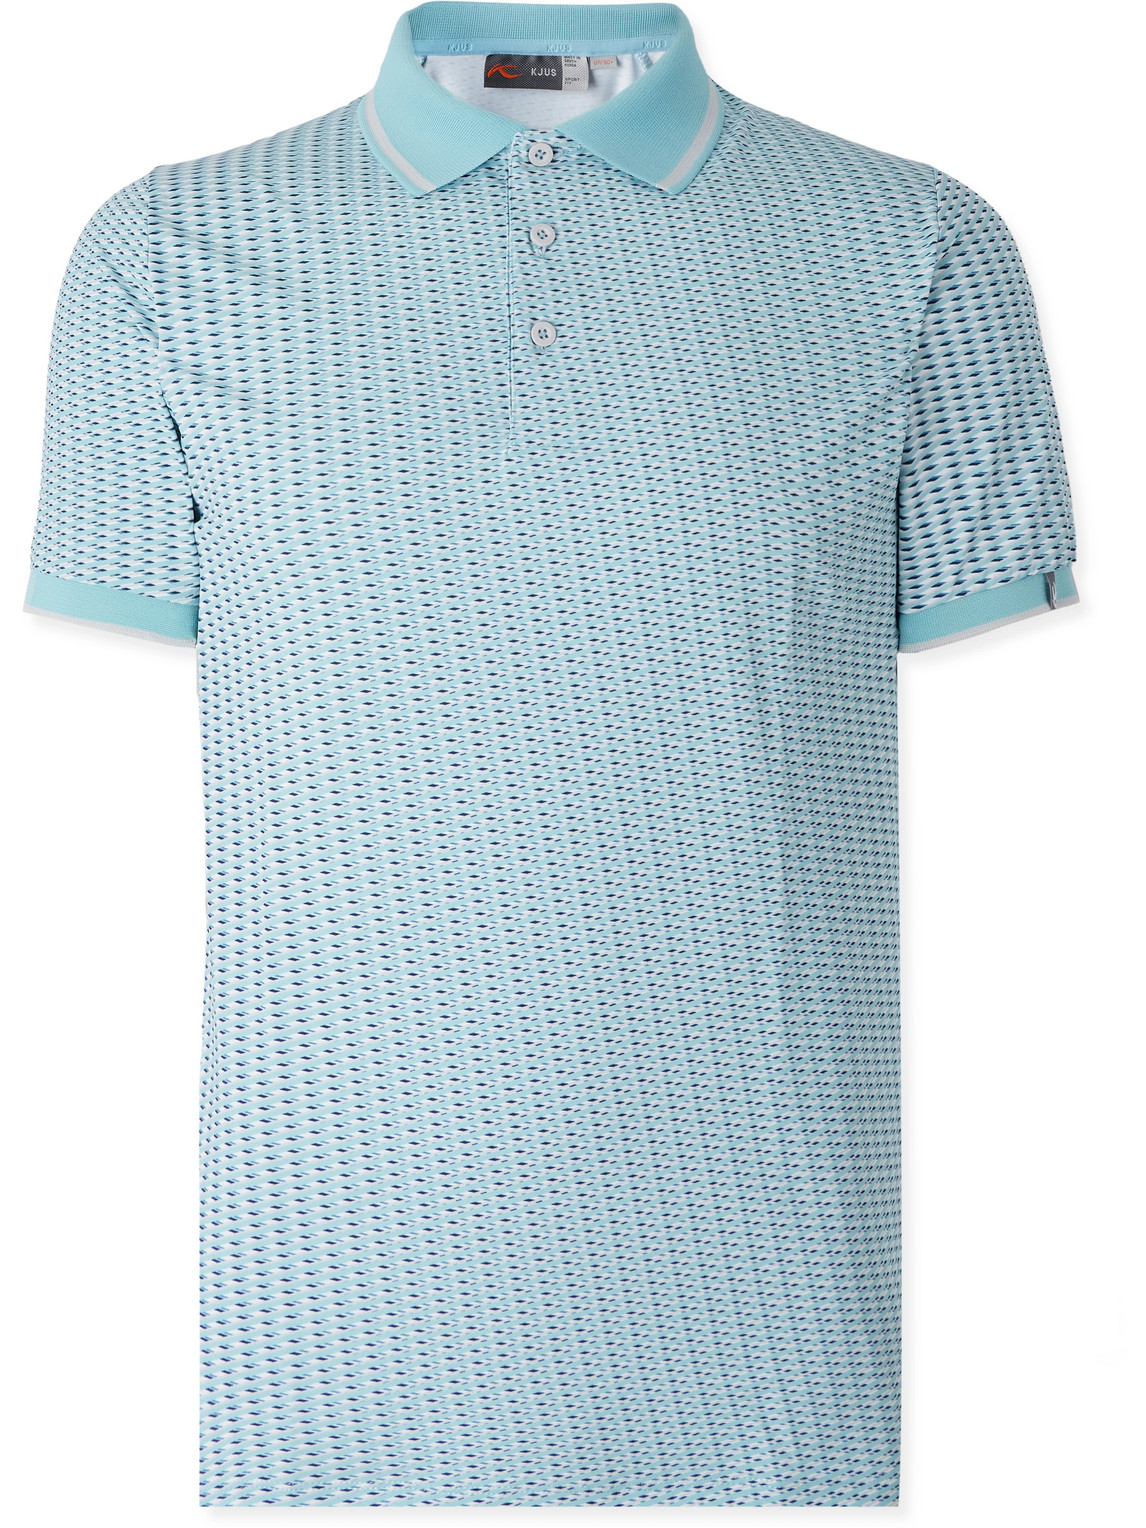 Spot Printed Golf Polo Shirt